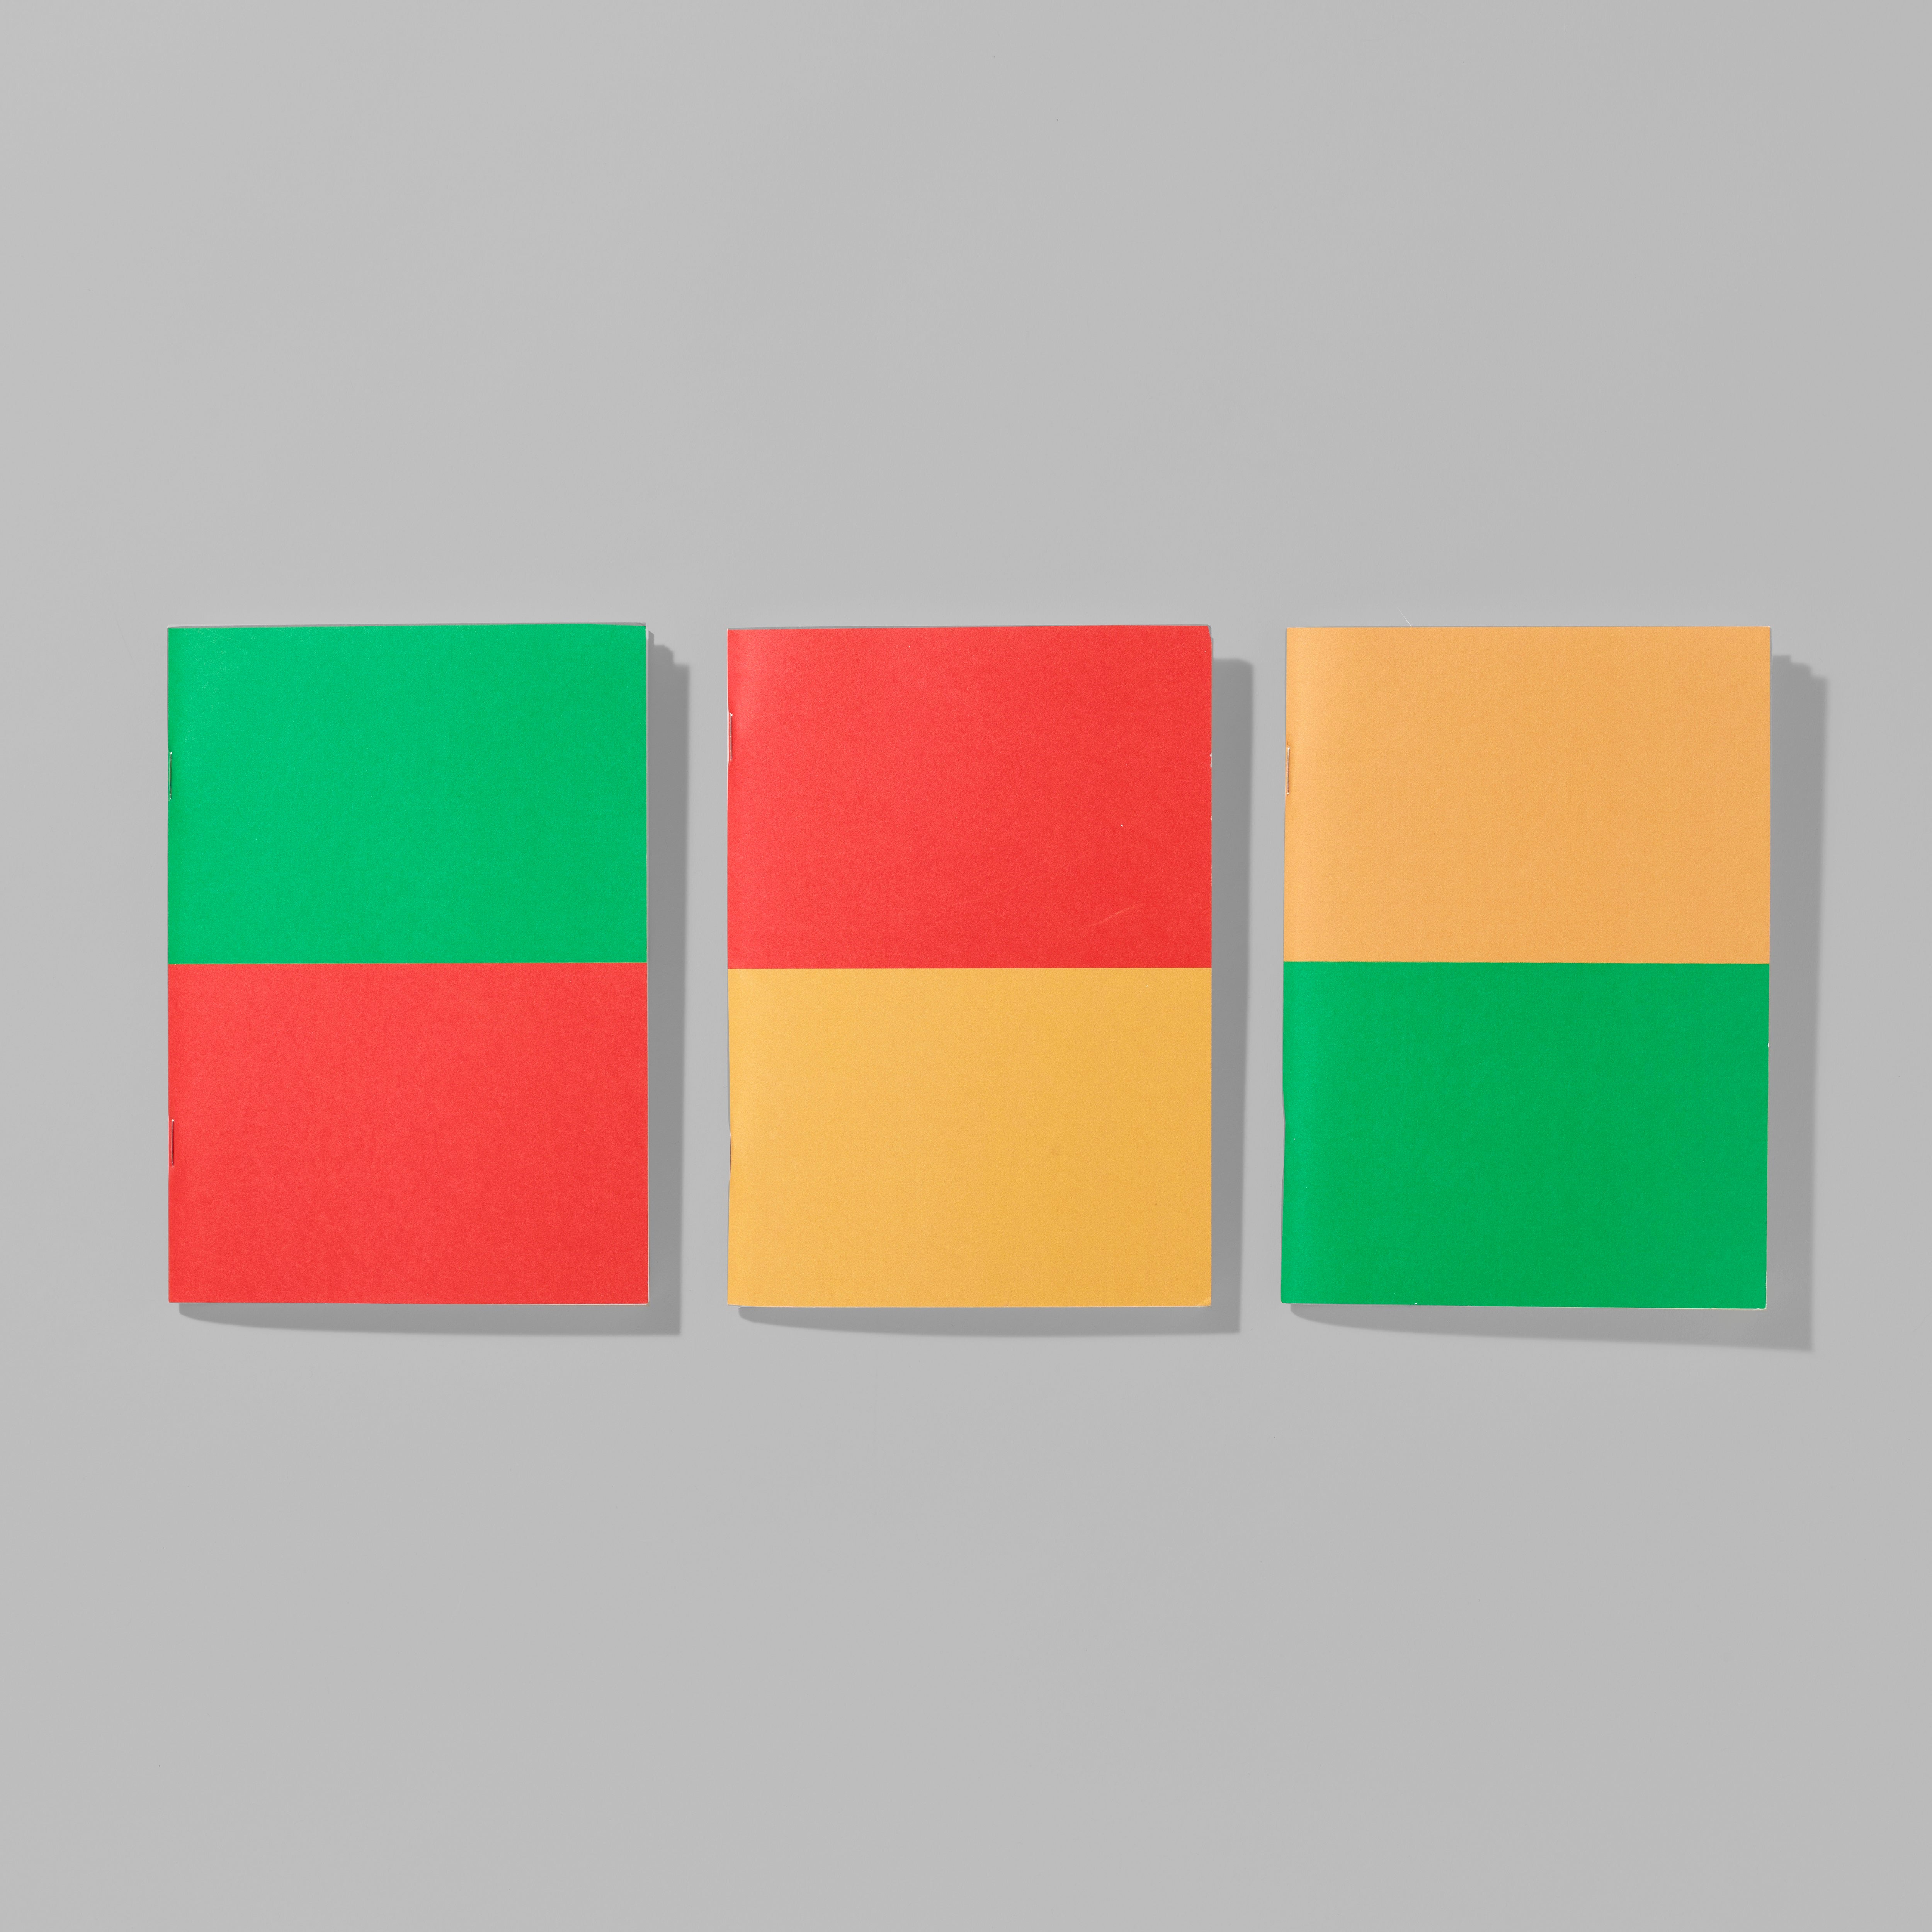 Biennial Sketchbooks in three color ways: Green/Orange, Orange/Yellow, and Yellow/Green